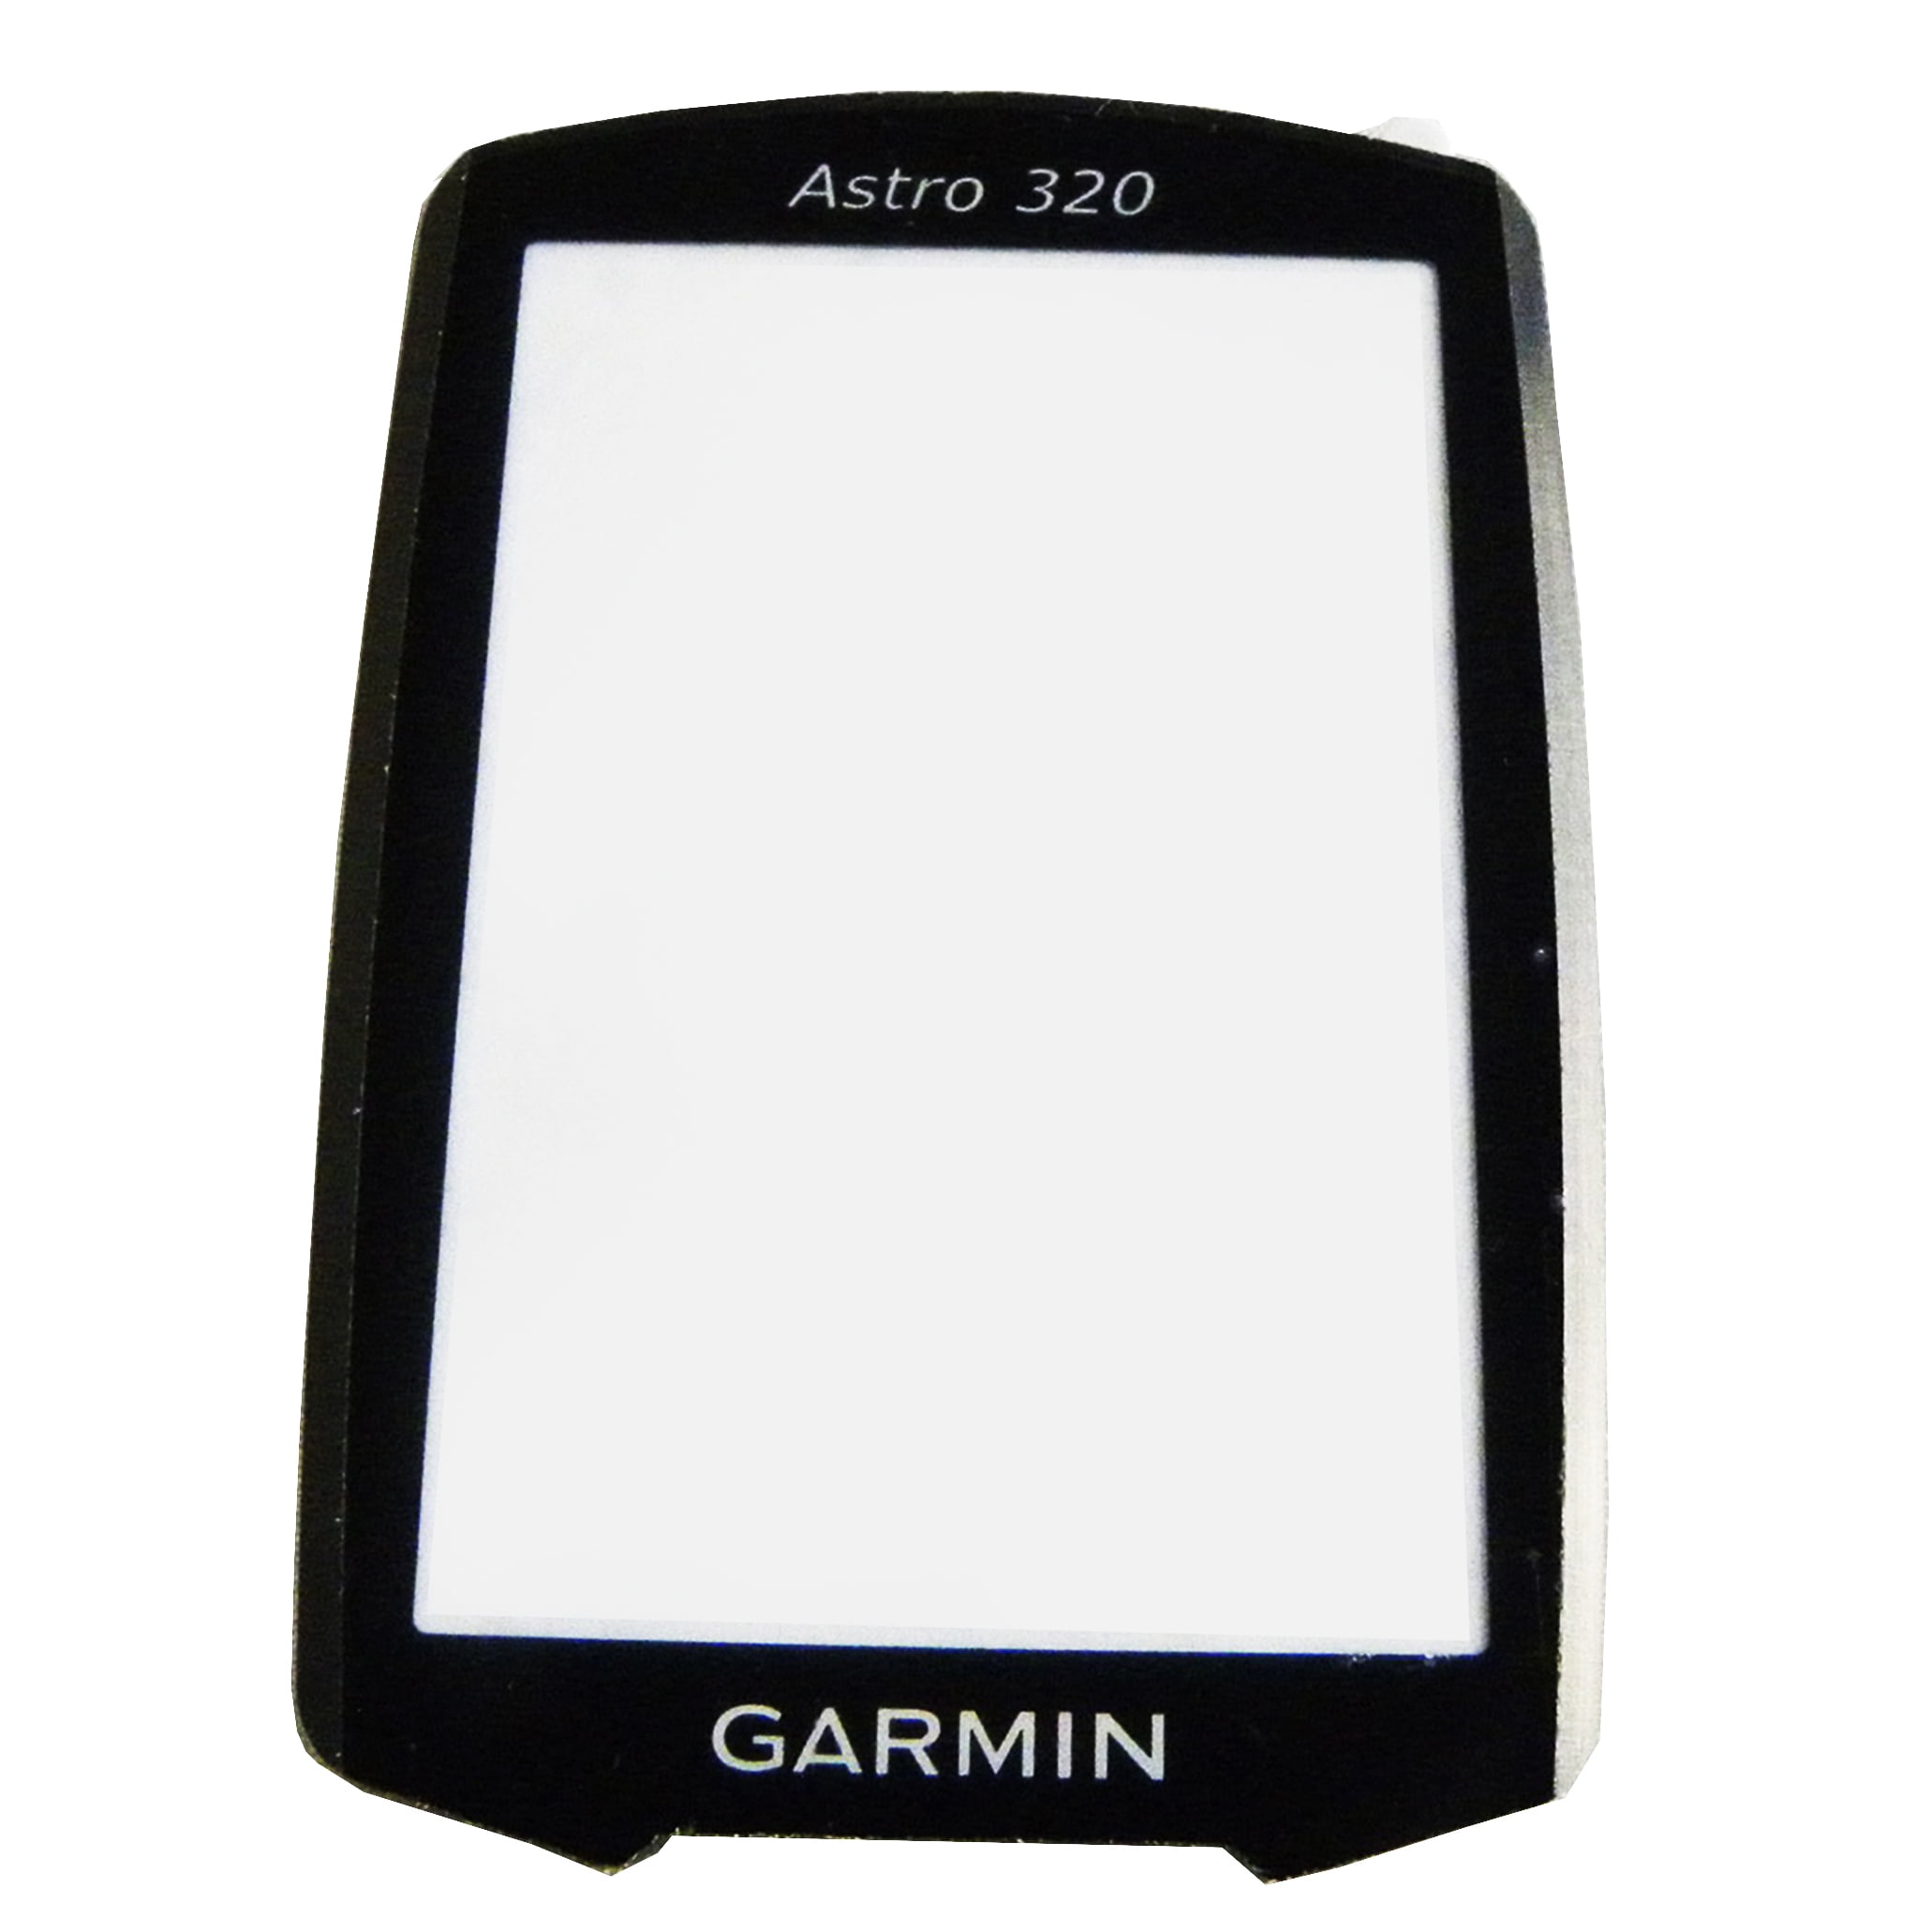 Original  2.6 lcd screen For Garmin astro 320 astro 430 Replacement parts 